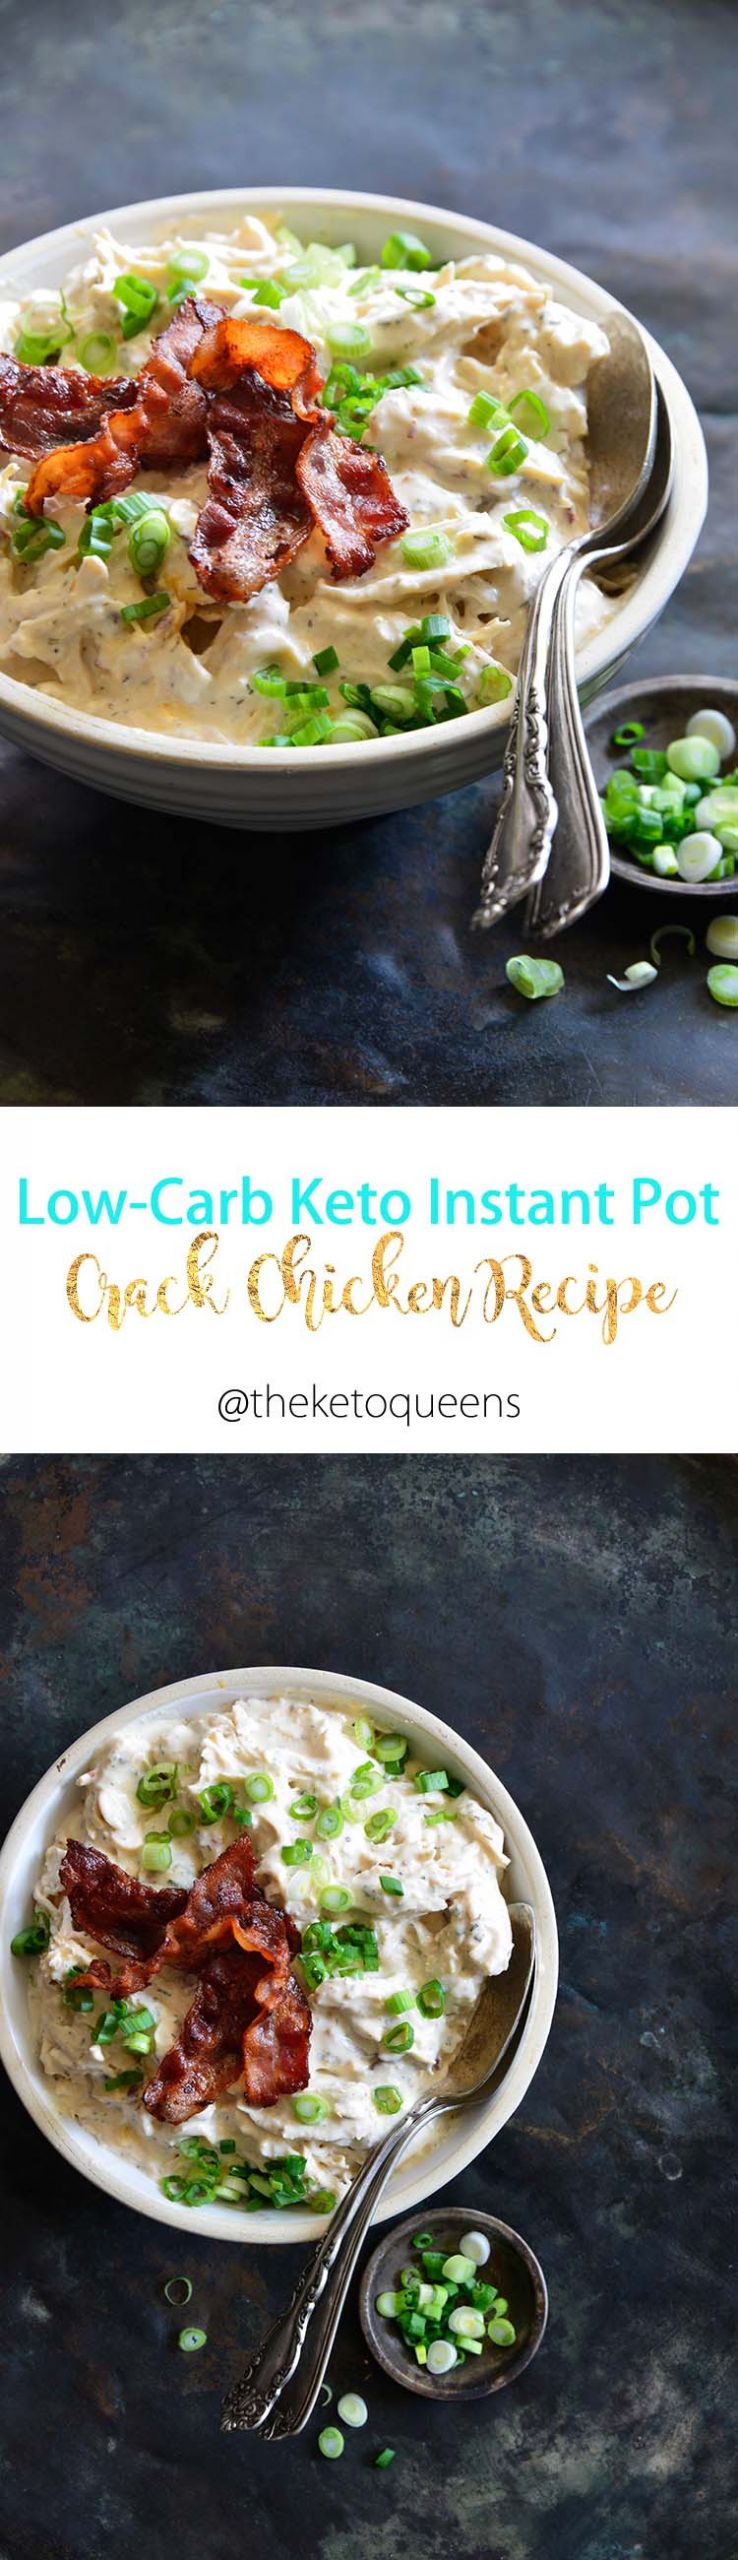 Chicken Keto Instant Pot Recipes
 Easy Keto Low Carb Instant Pot Crack Chicken Recipe